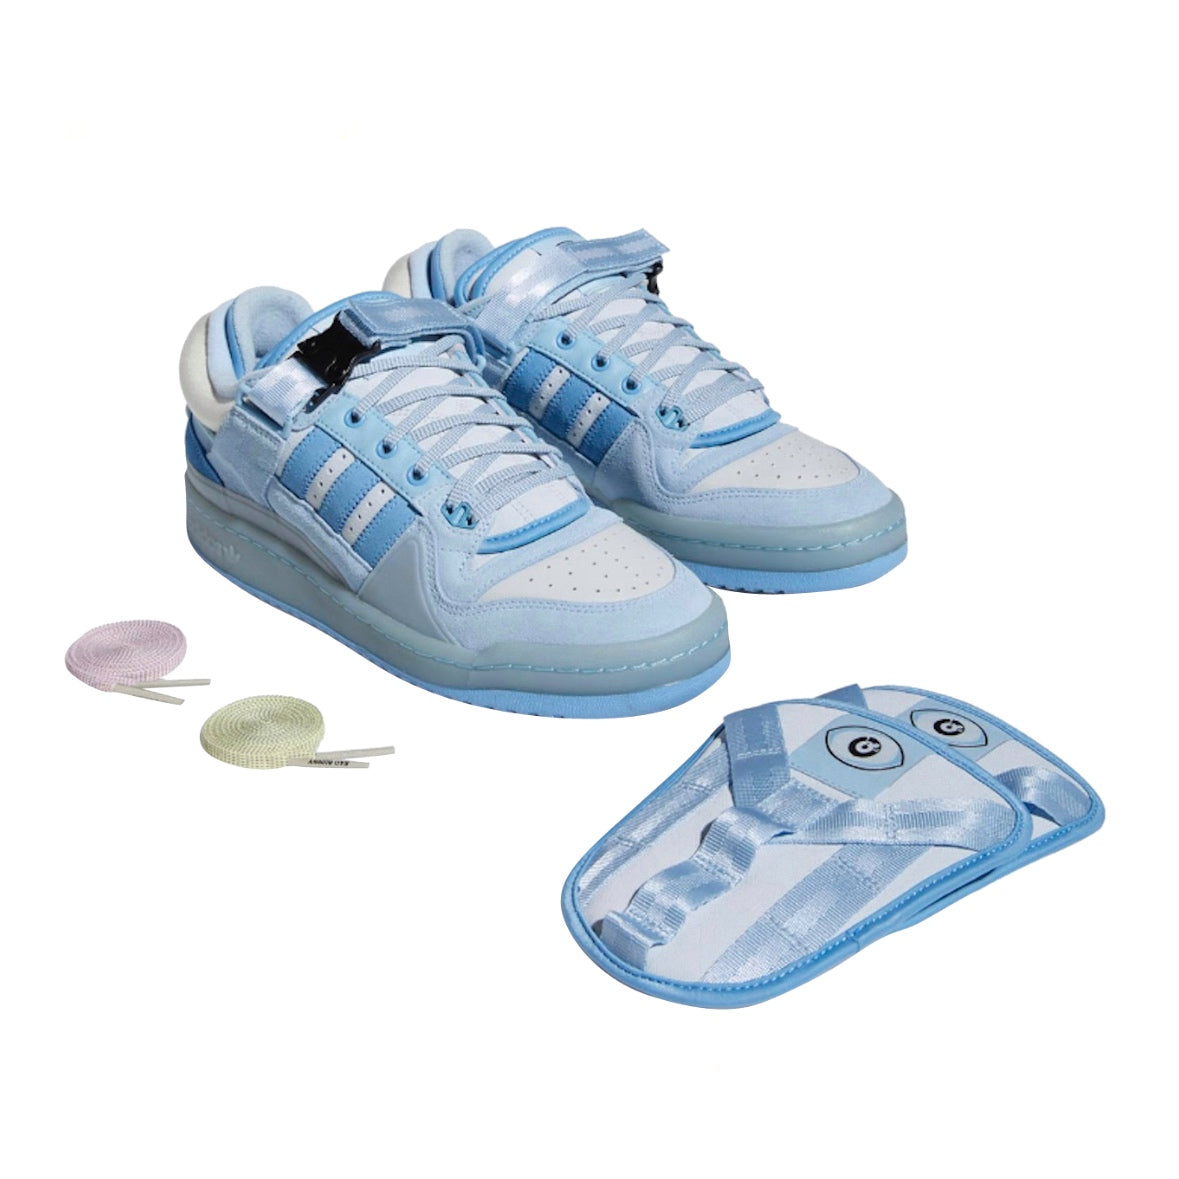 Adidas Forum Bad Bunny "Blue Tint"